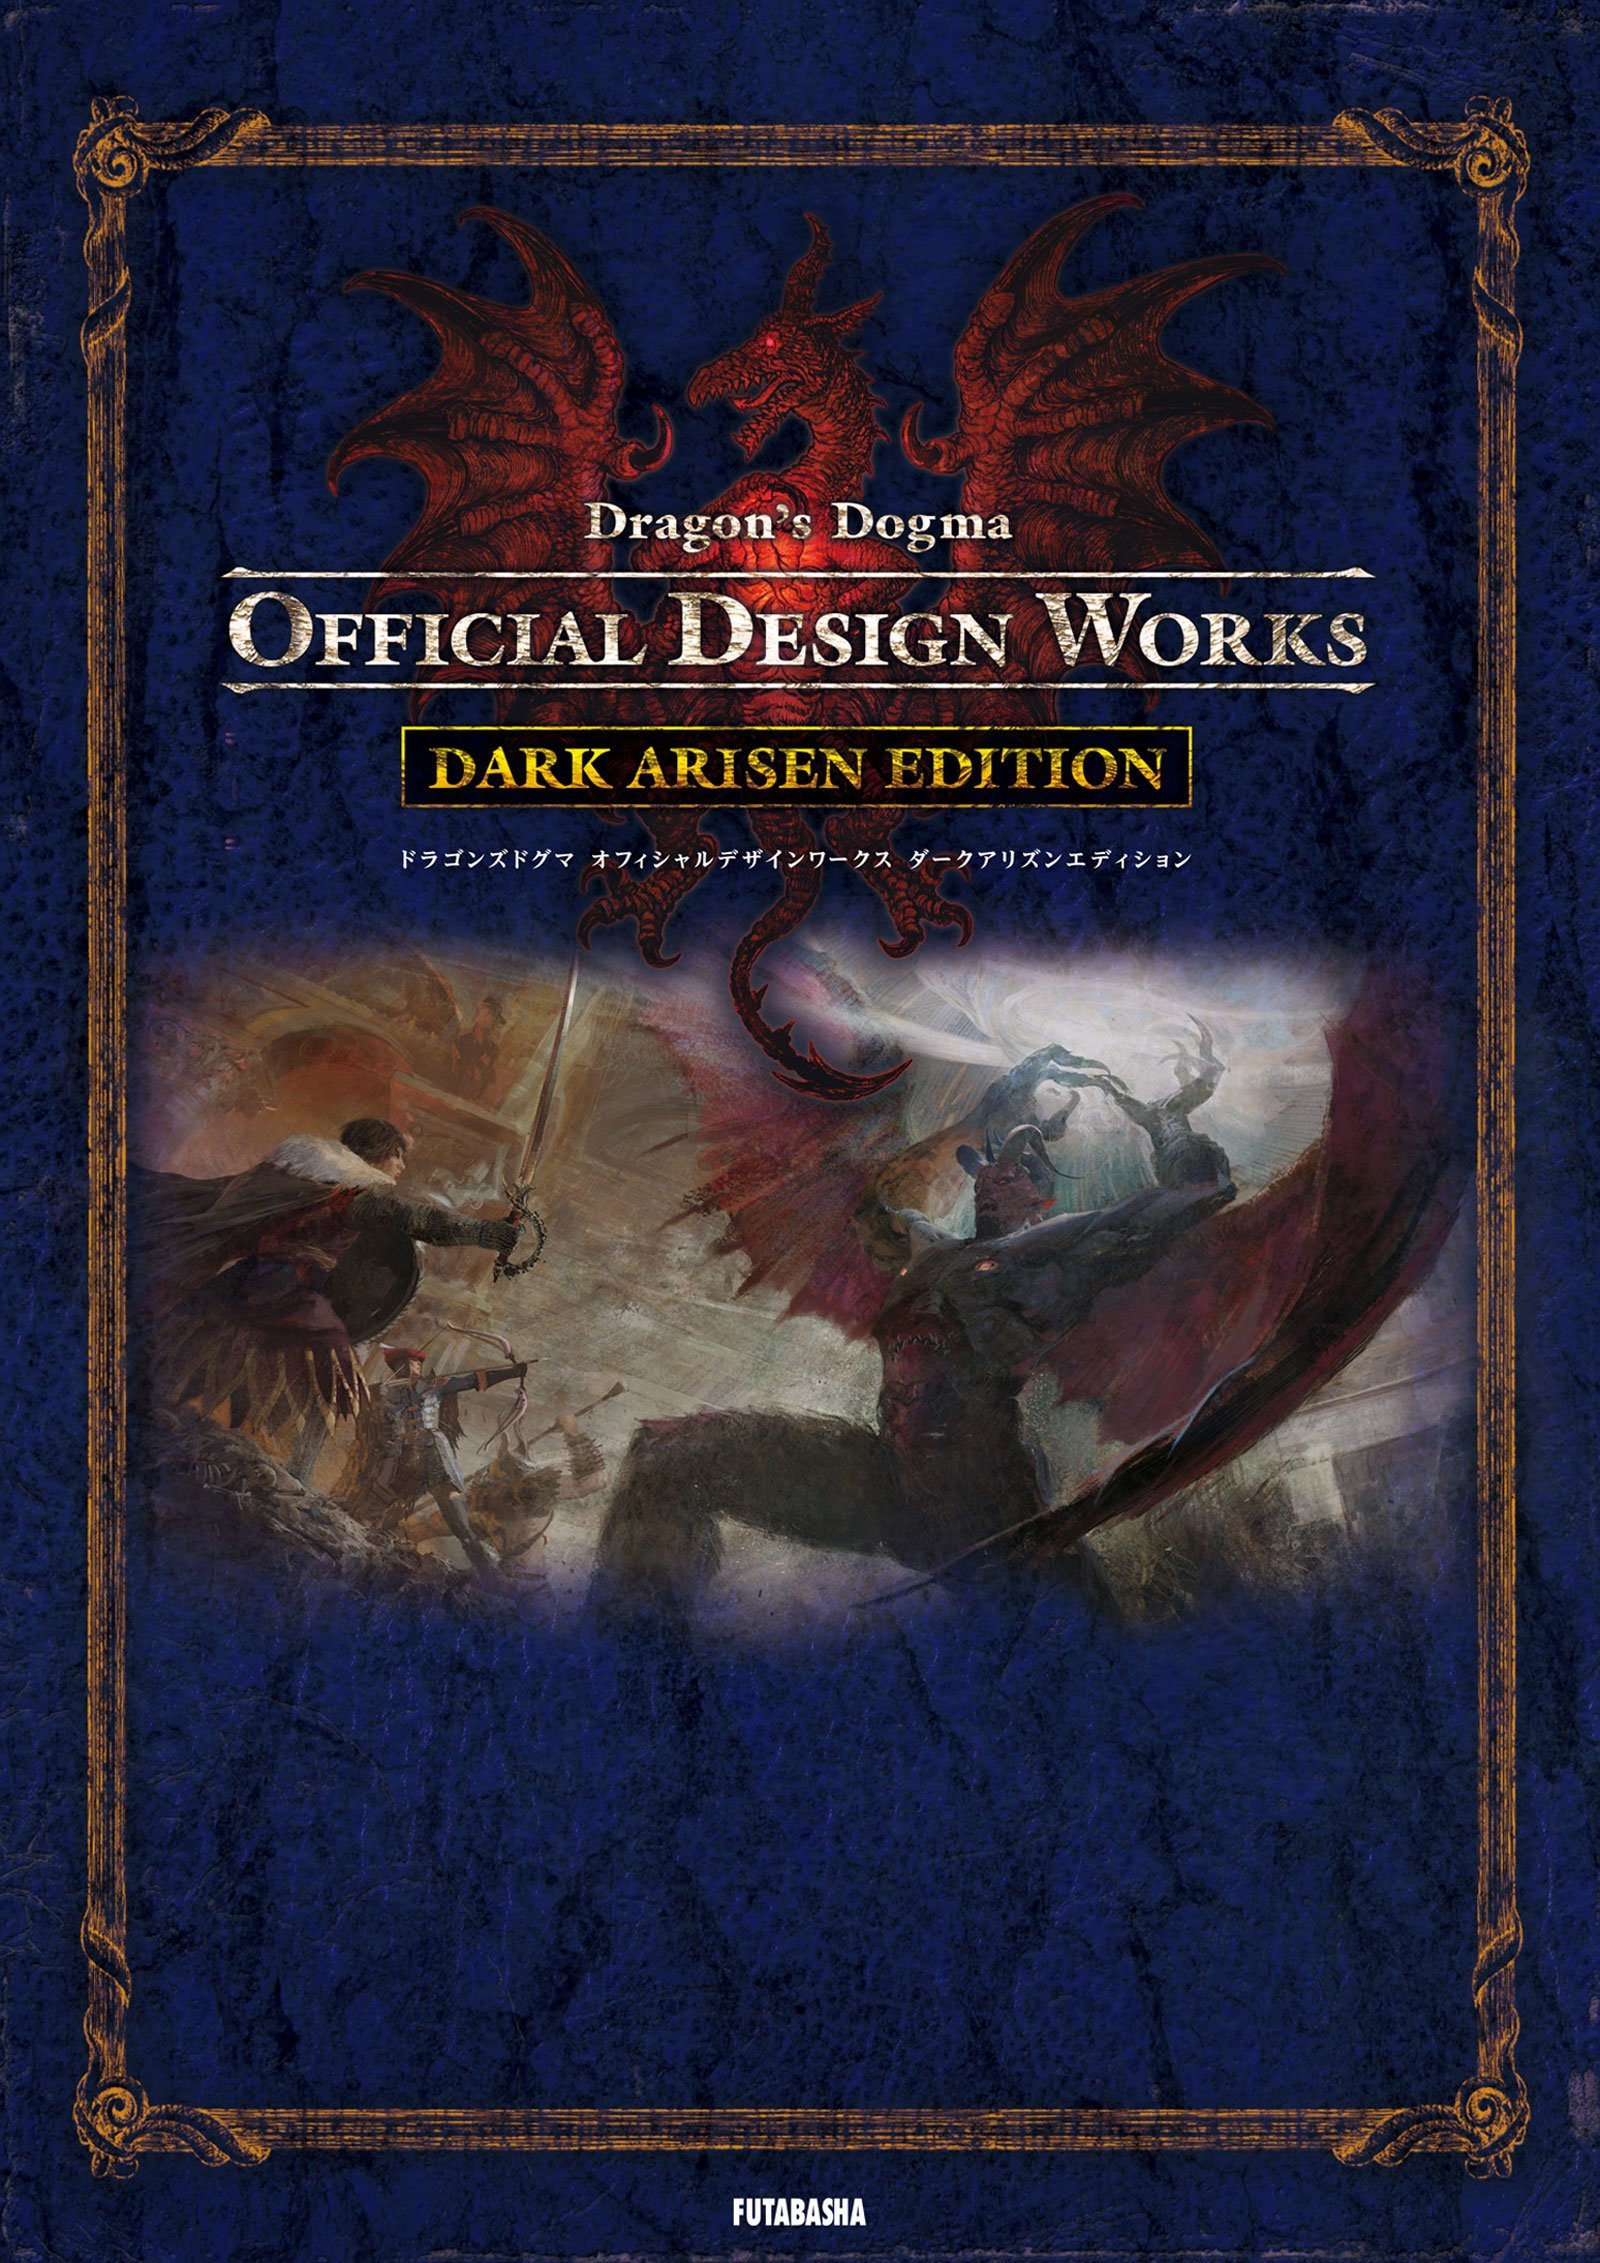 Dragon's Dogma - Official Design Works: Dark Arisen Edition (Japan)